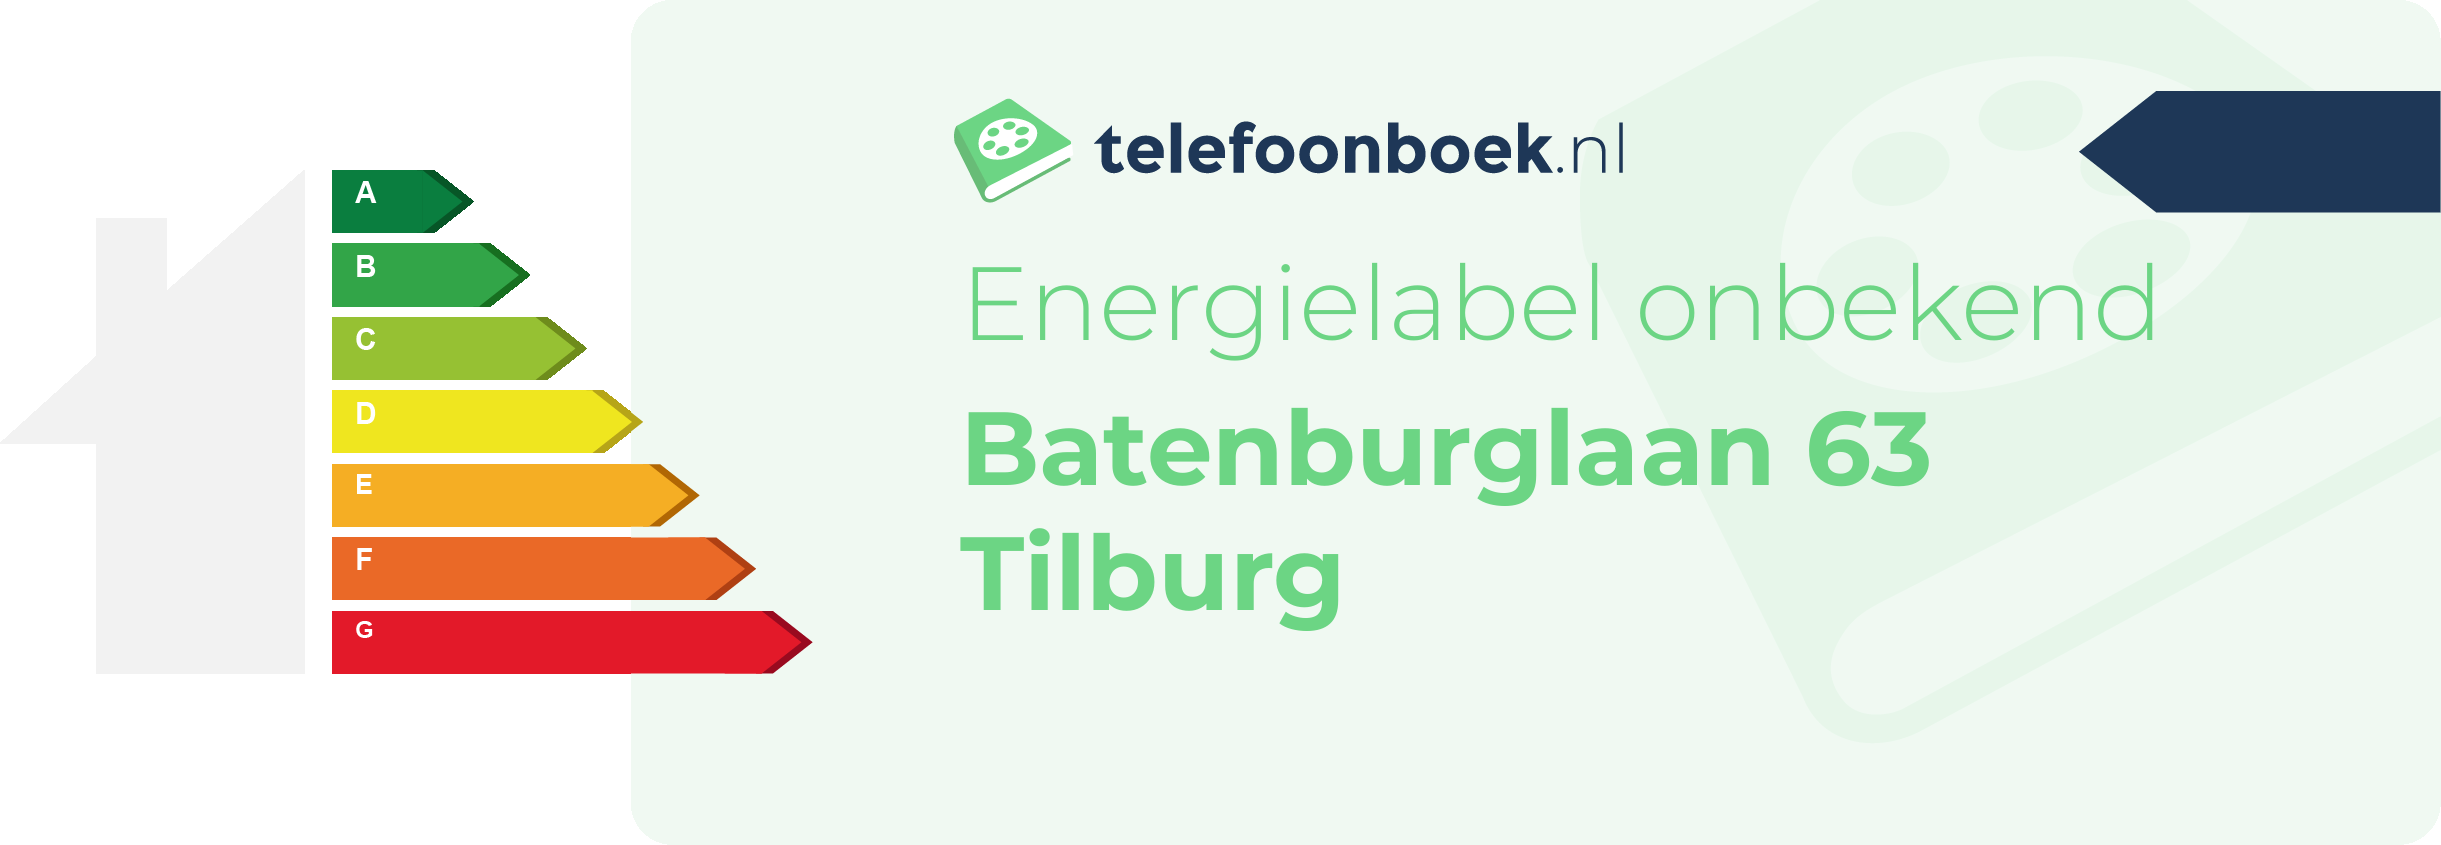 Energielabel Batenburglaan 63 Tilburg